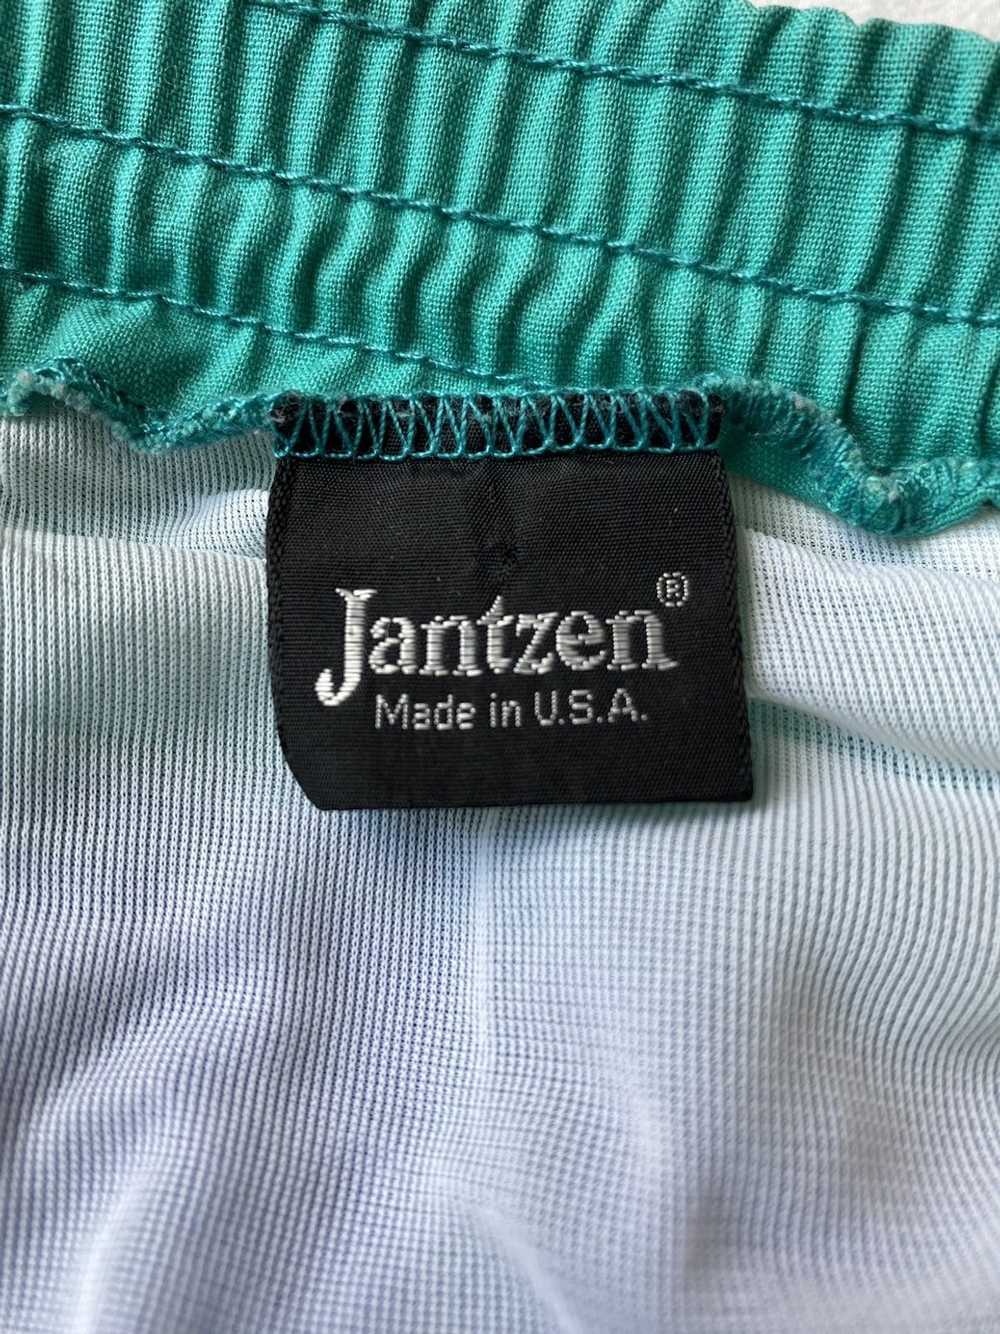 Jantzen 70s 80’s Jantzen swim trunks - image 4